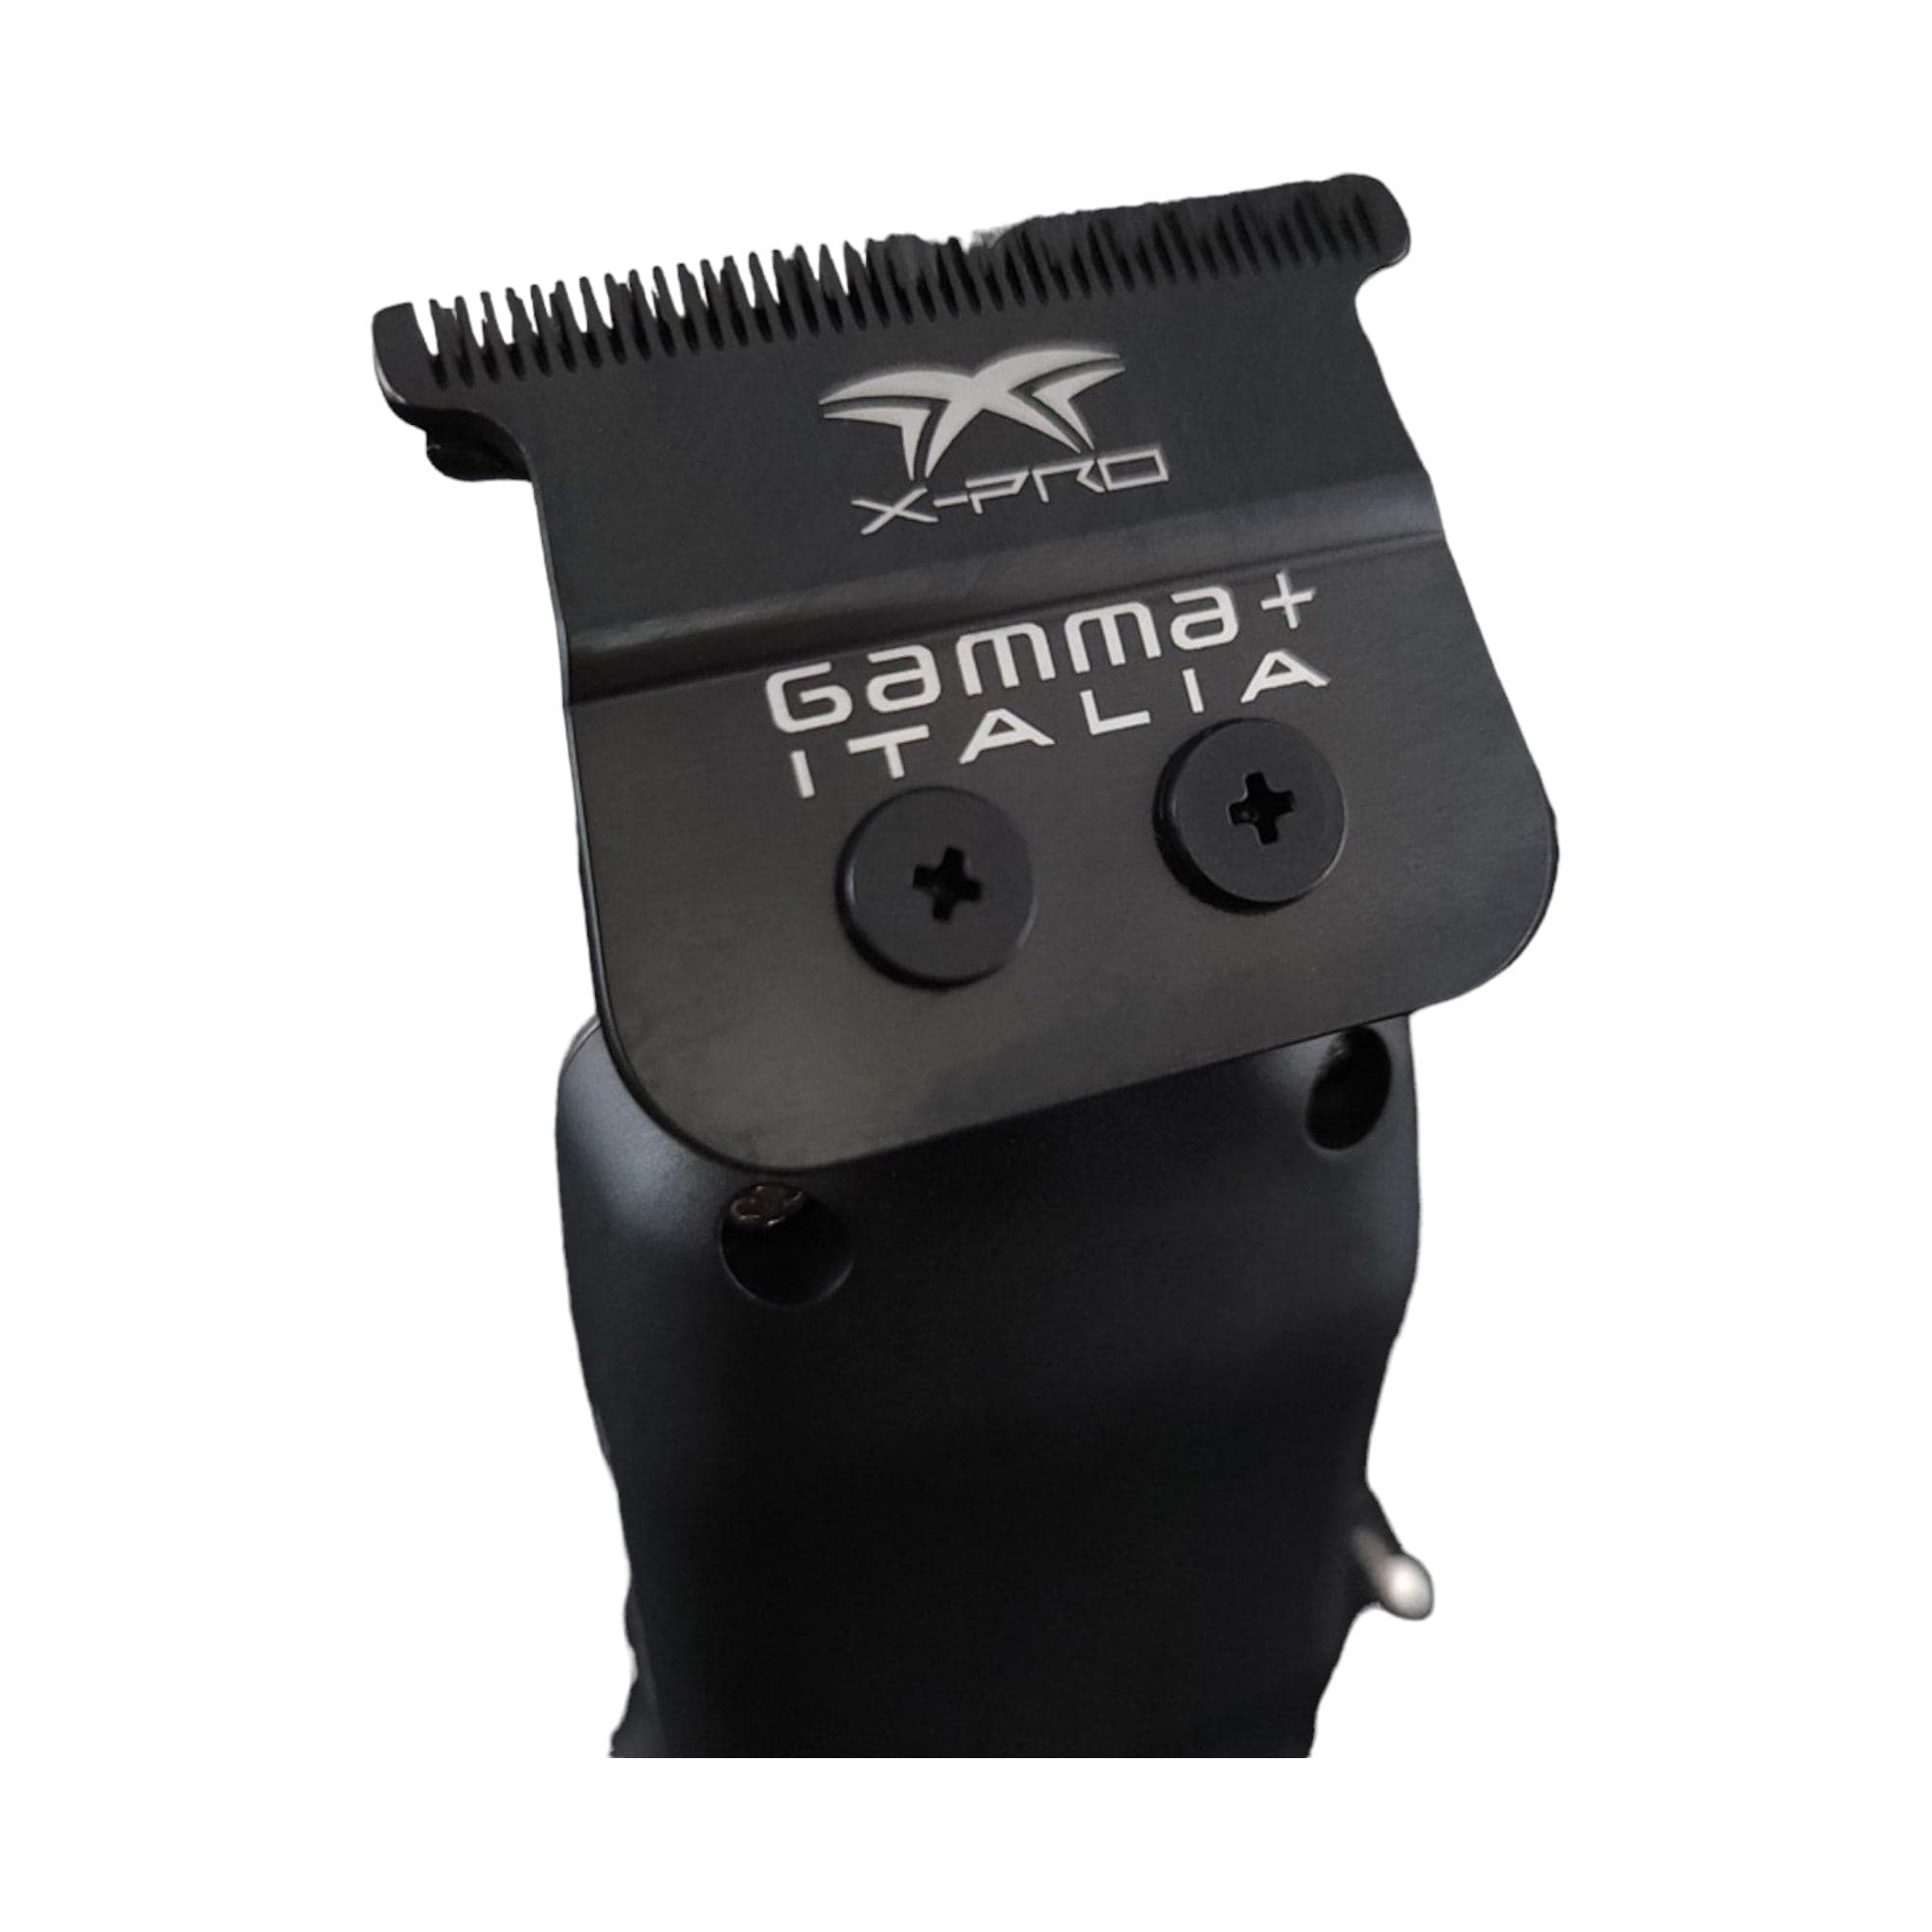 Gamma+ - Boosted Super Torque Motor Trimmer